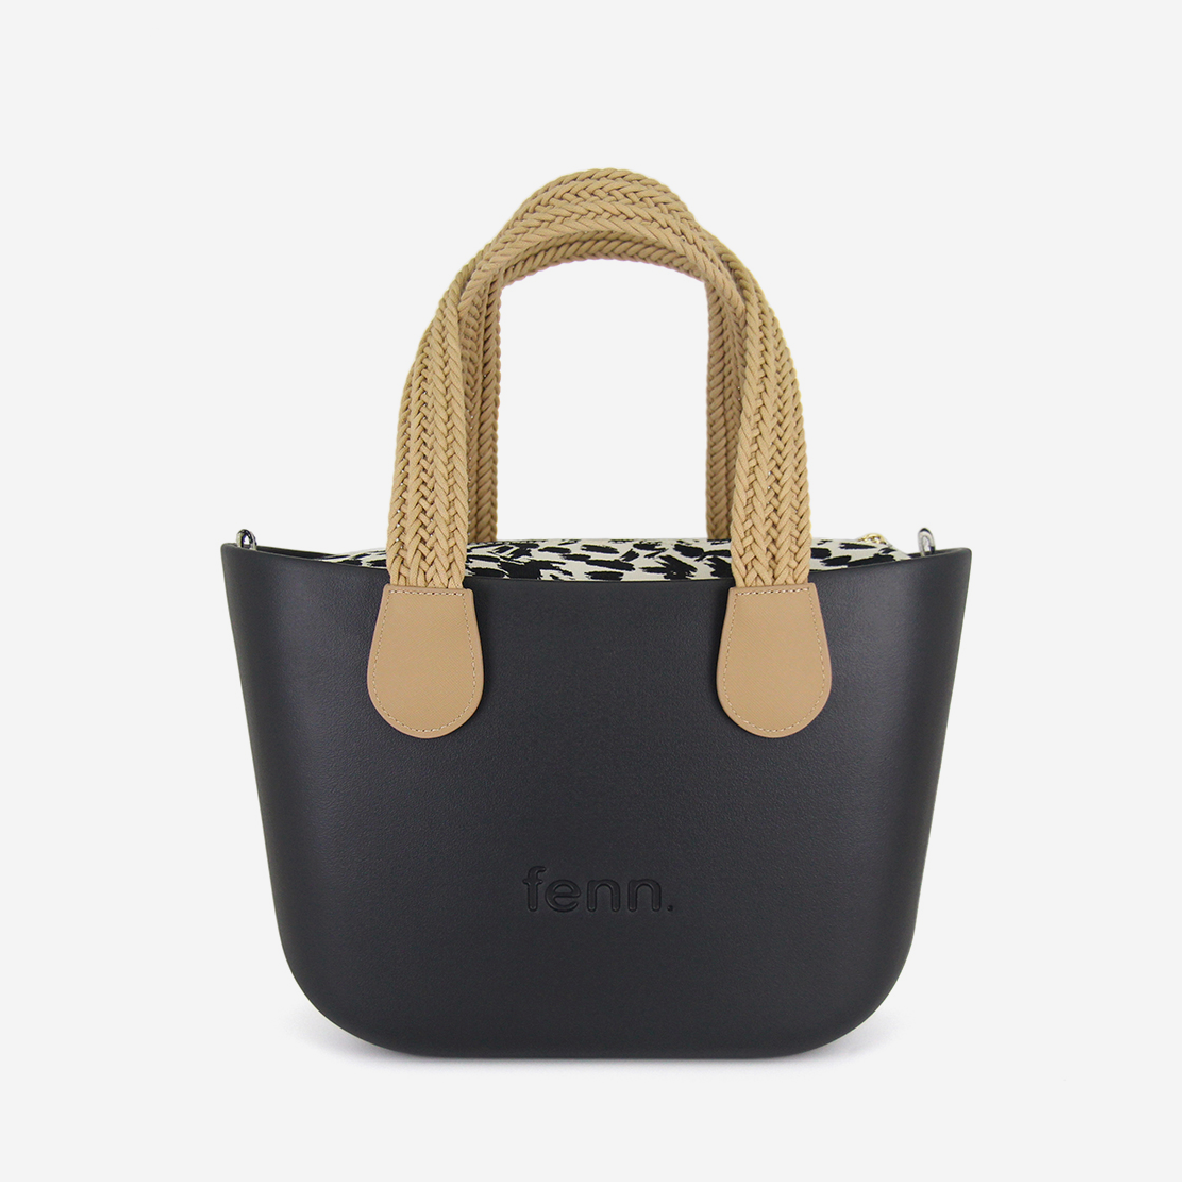 Petite Handbag - Black Tan Woven